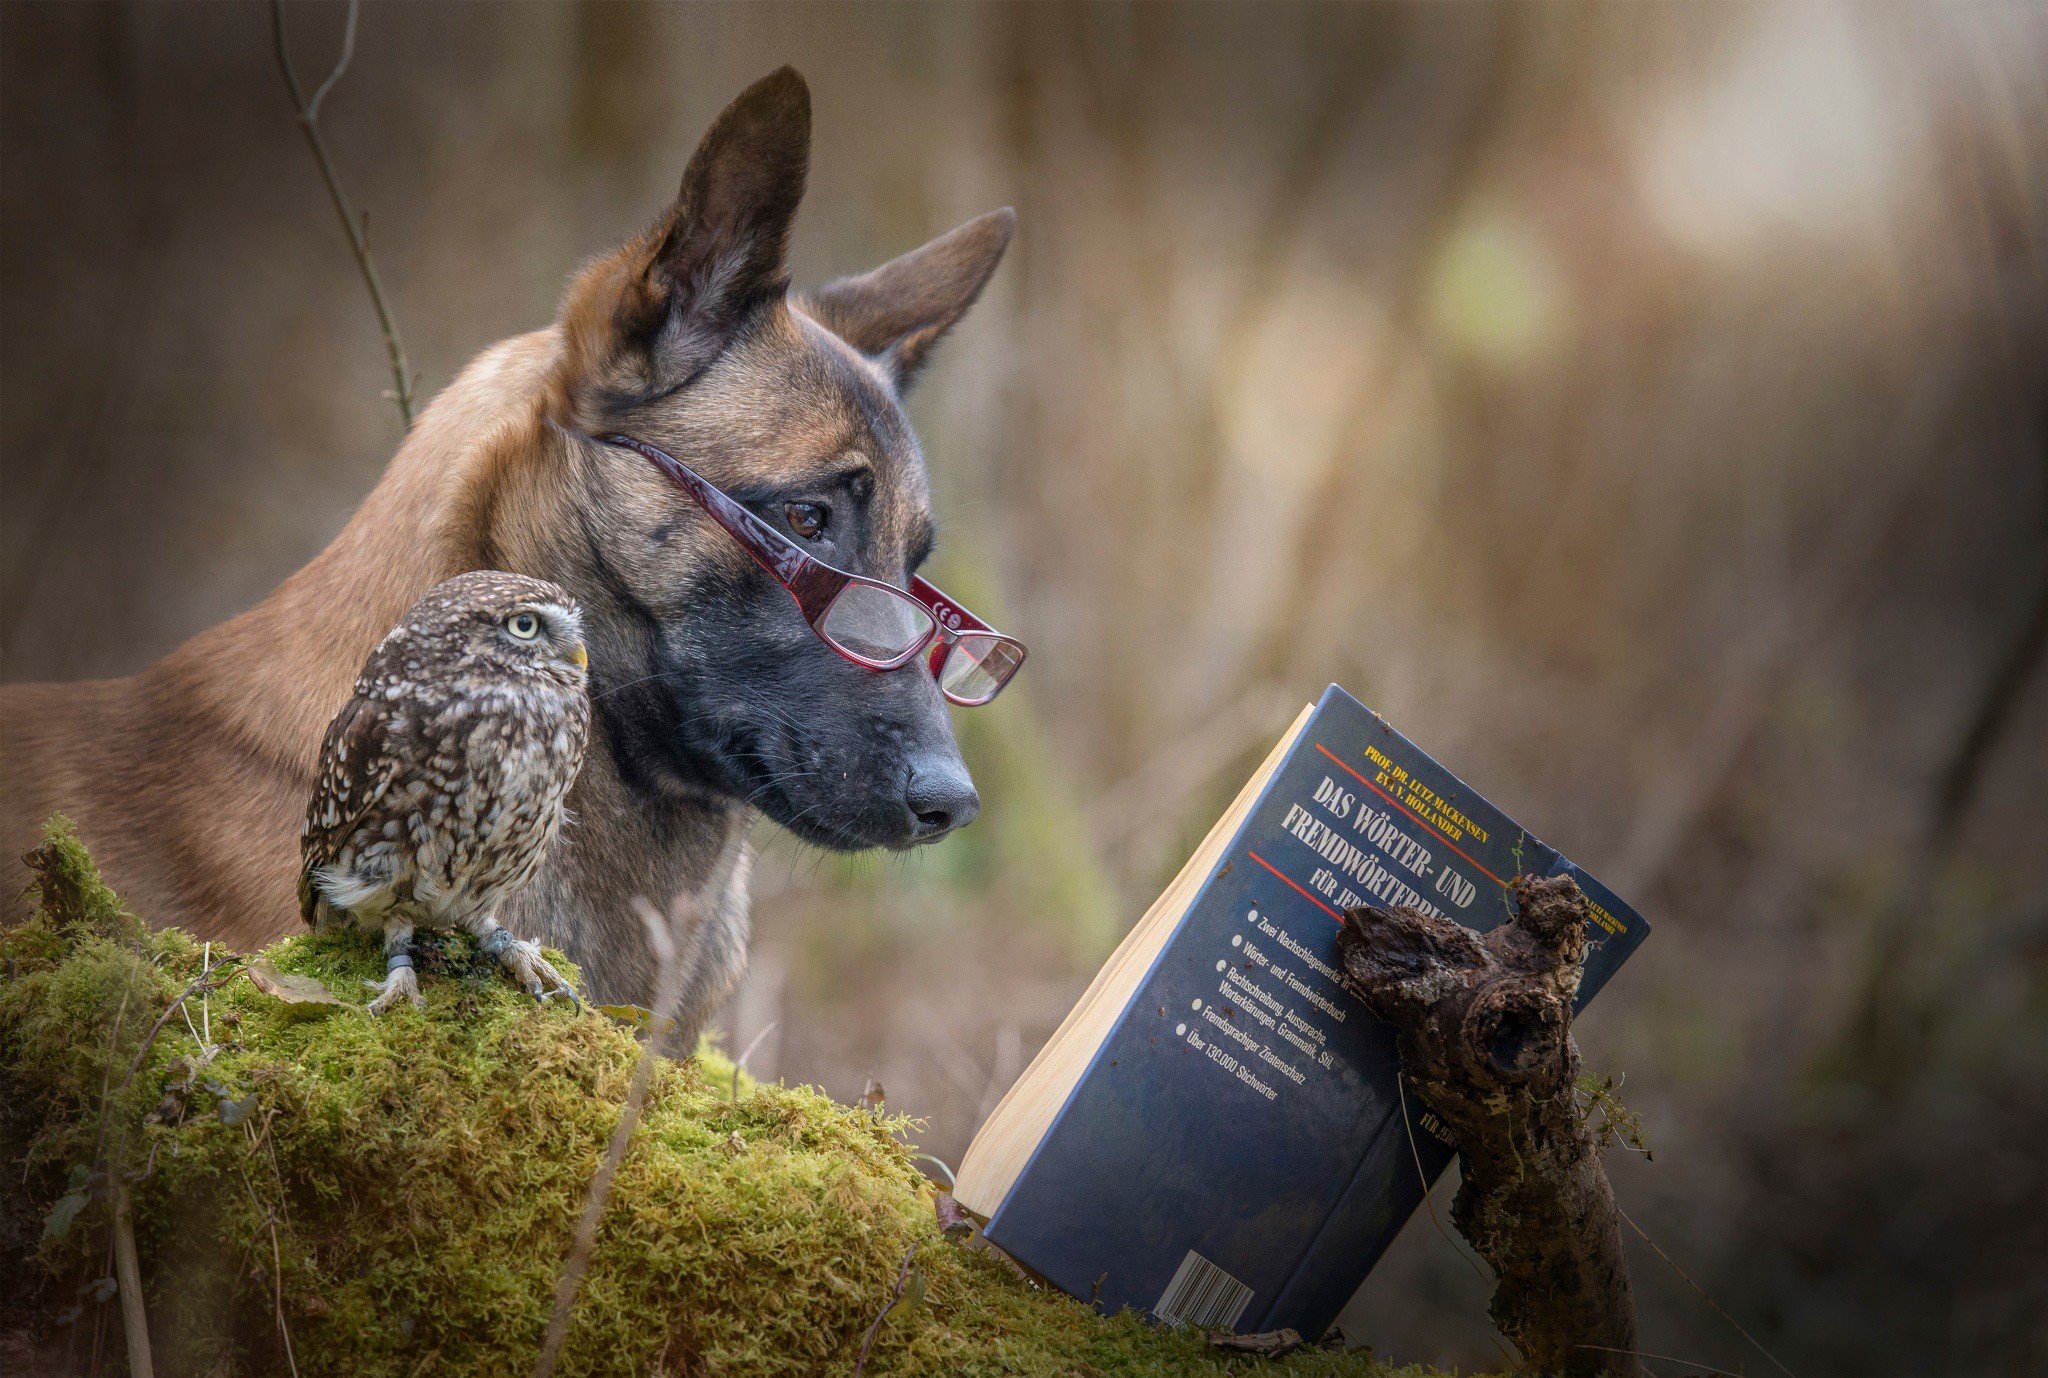 General 2048x1378 nature animals owl humor reading glasses books branch German moss dog German Shepherd mammals birds